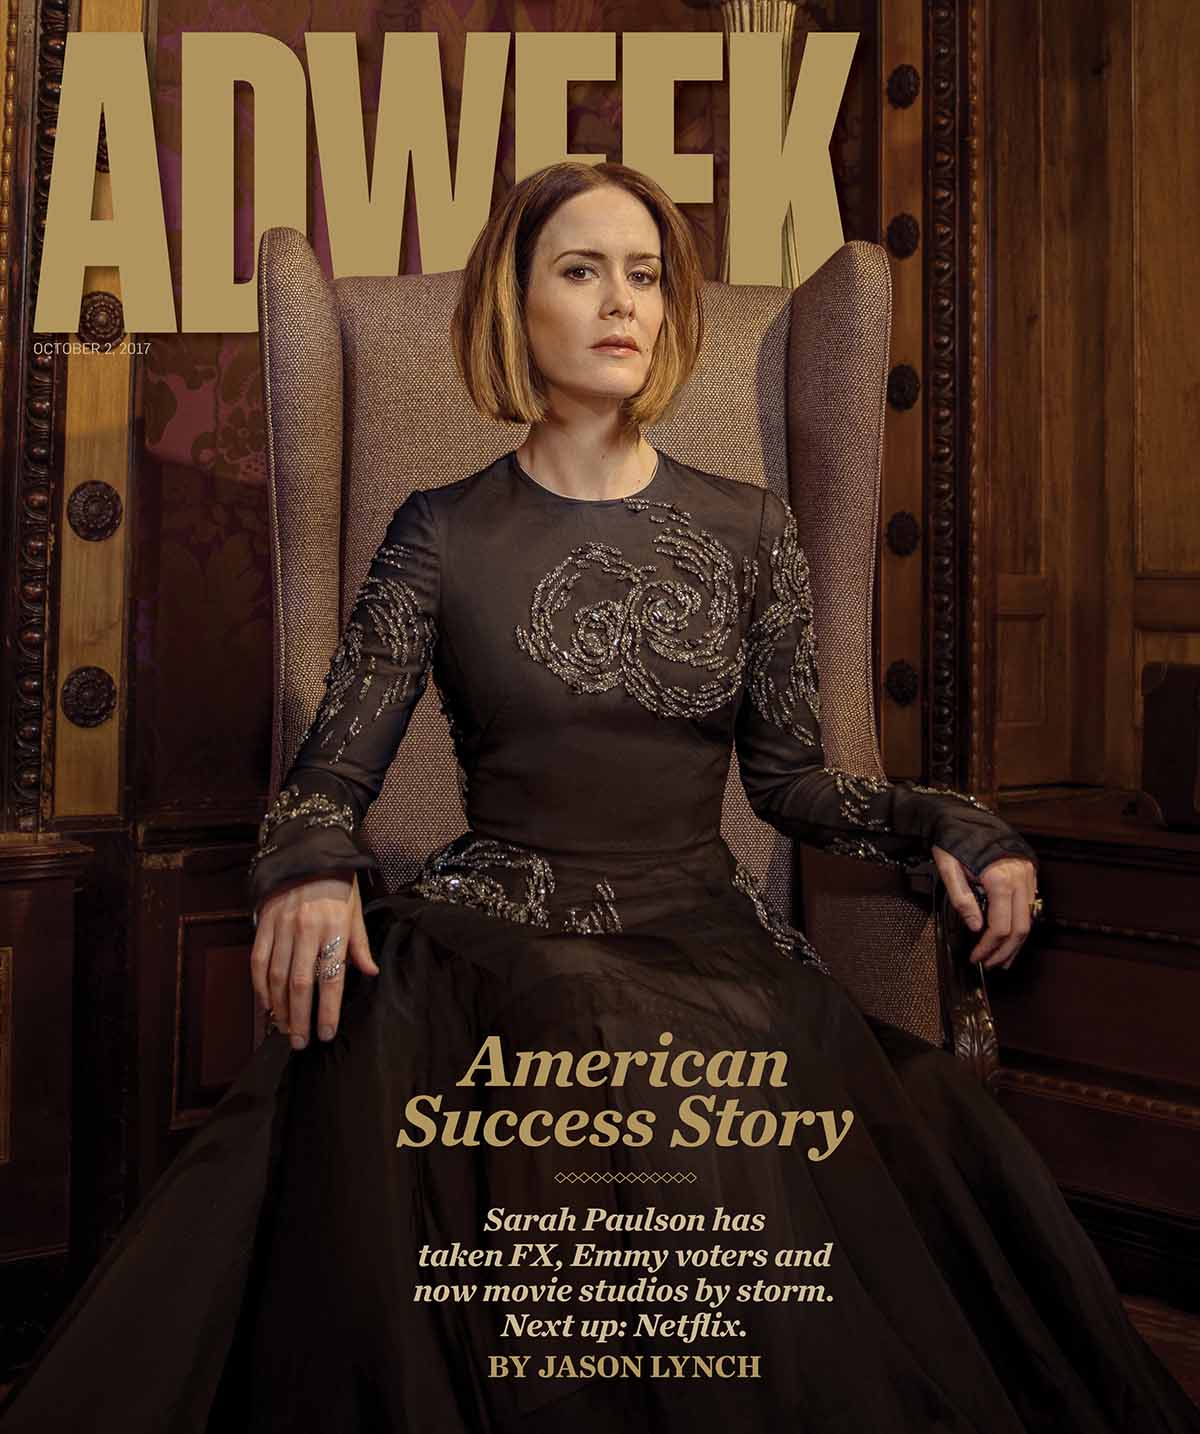 Sarah Paulson Adweek cover